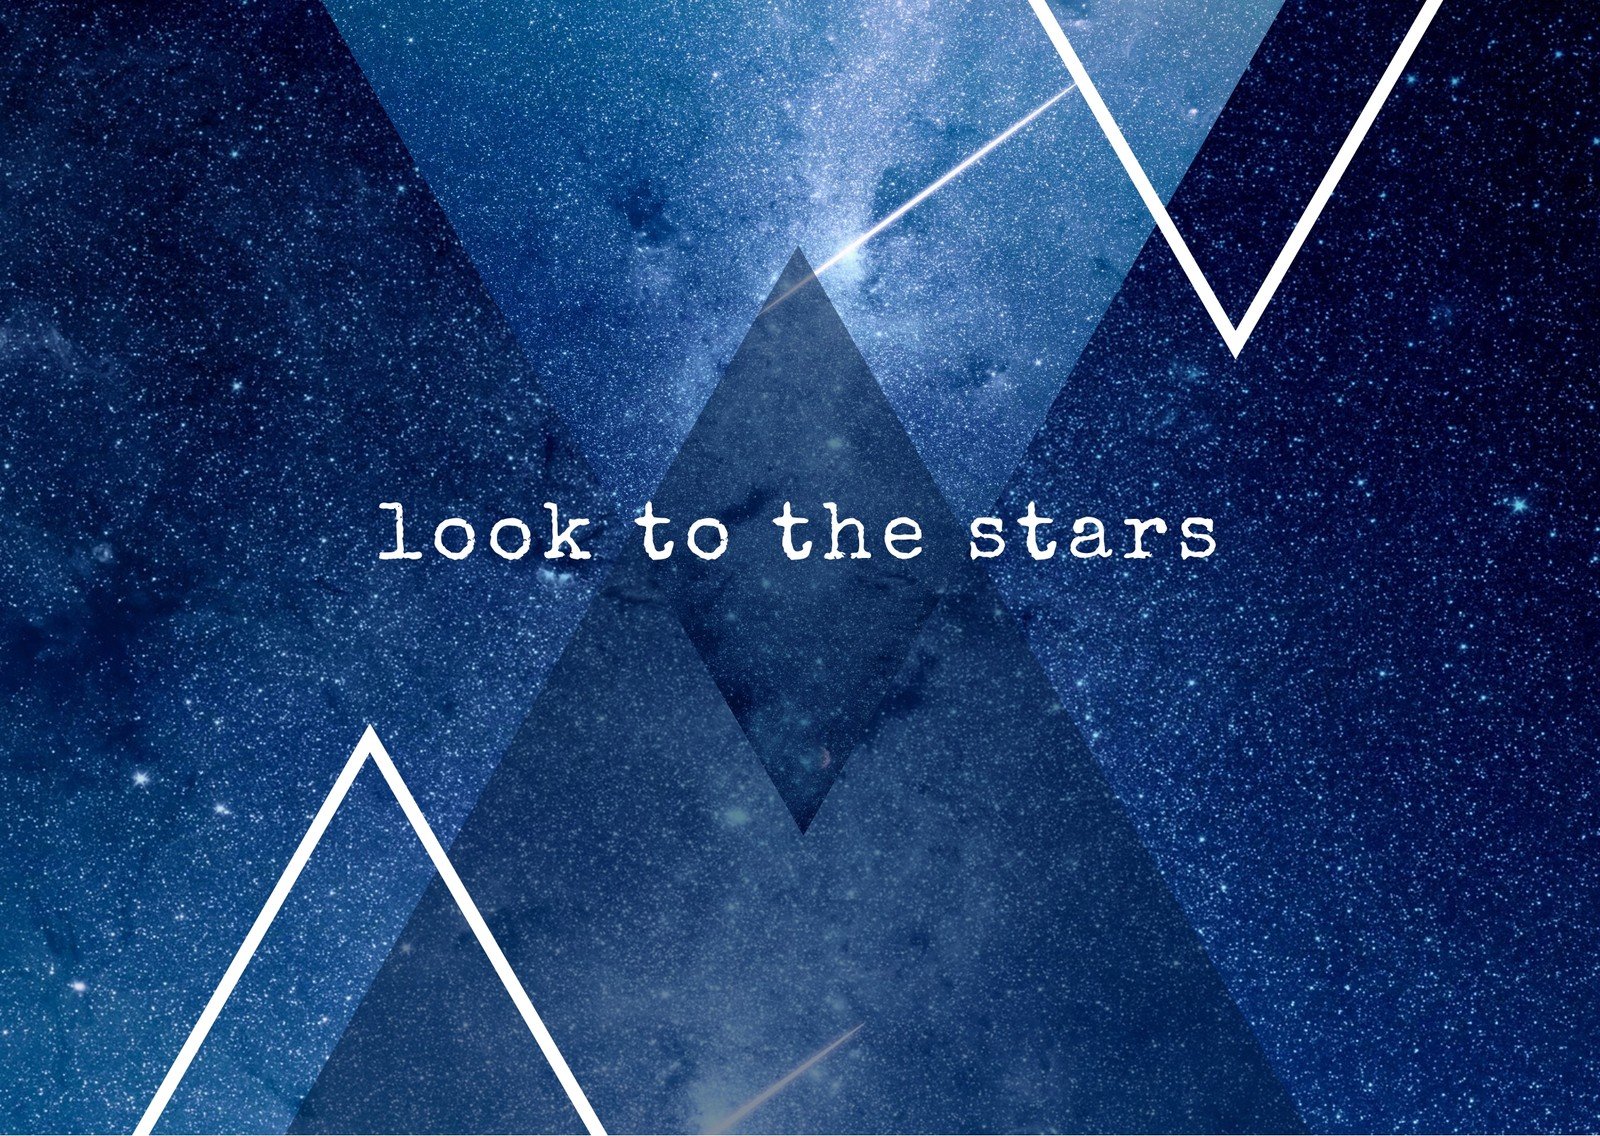 https://marketplace.canva.com/EADao_wAwTc/1/0/1600w/canva-blue-stars-space-triangles-picture-postcard-1kifRQaJXaU.jpg